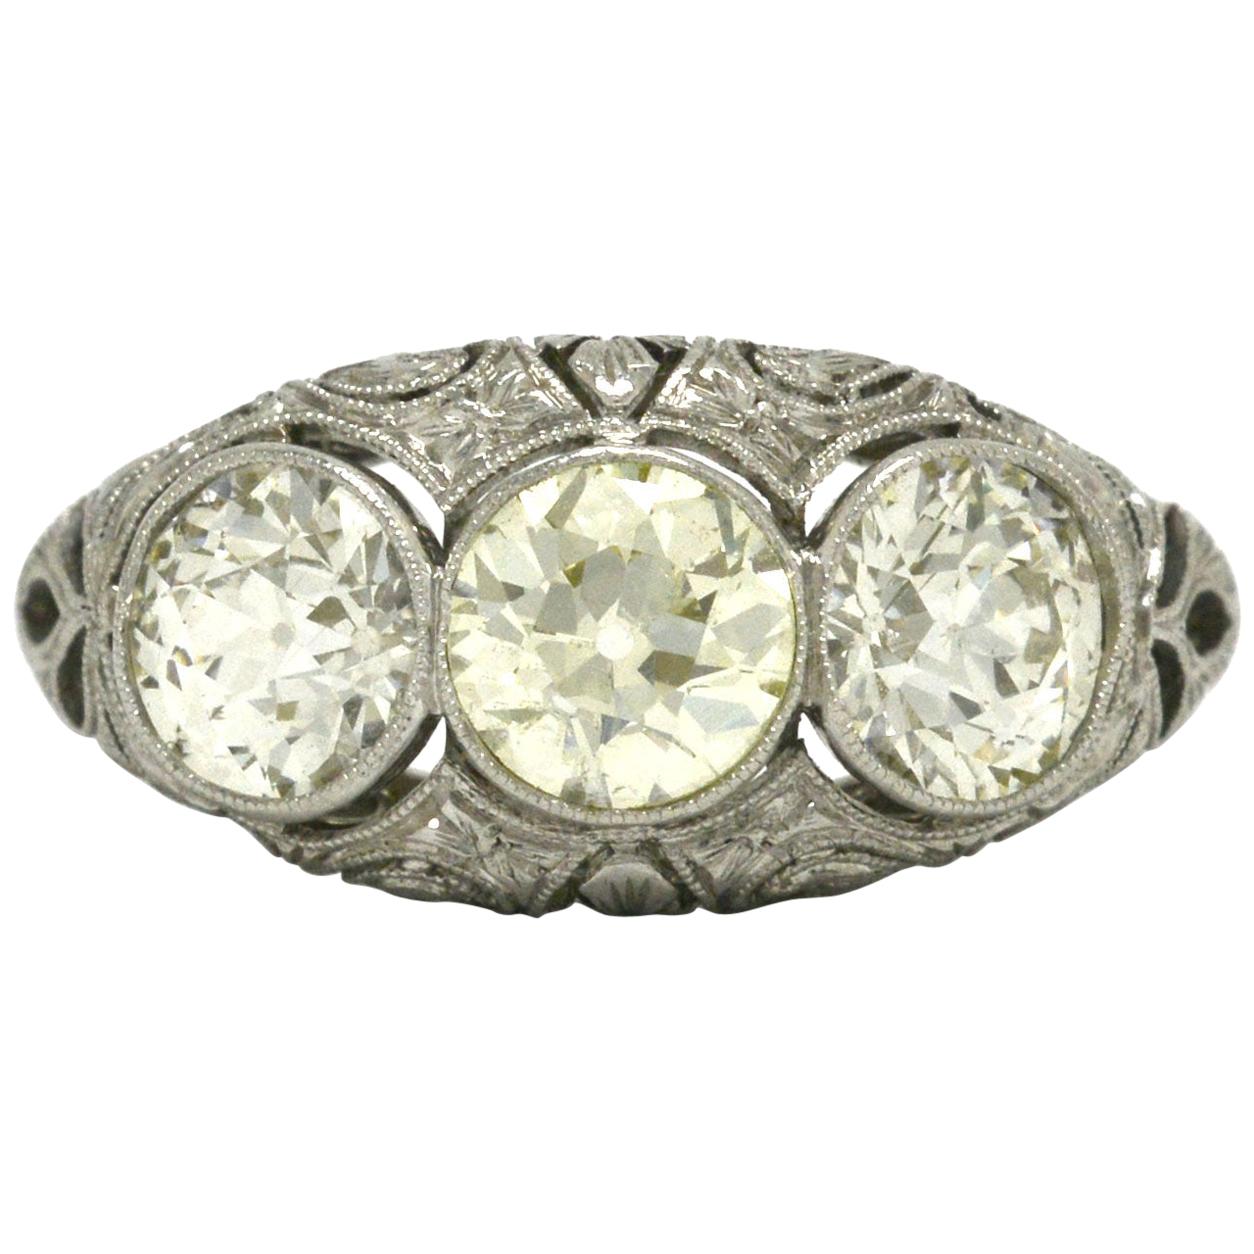 Antique Victorian Edwardian Decorative Filigree Ring 3 Ct Diamond 14K White Gold 